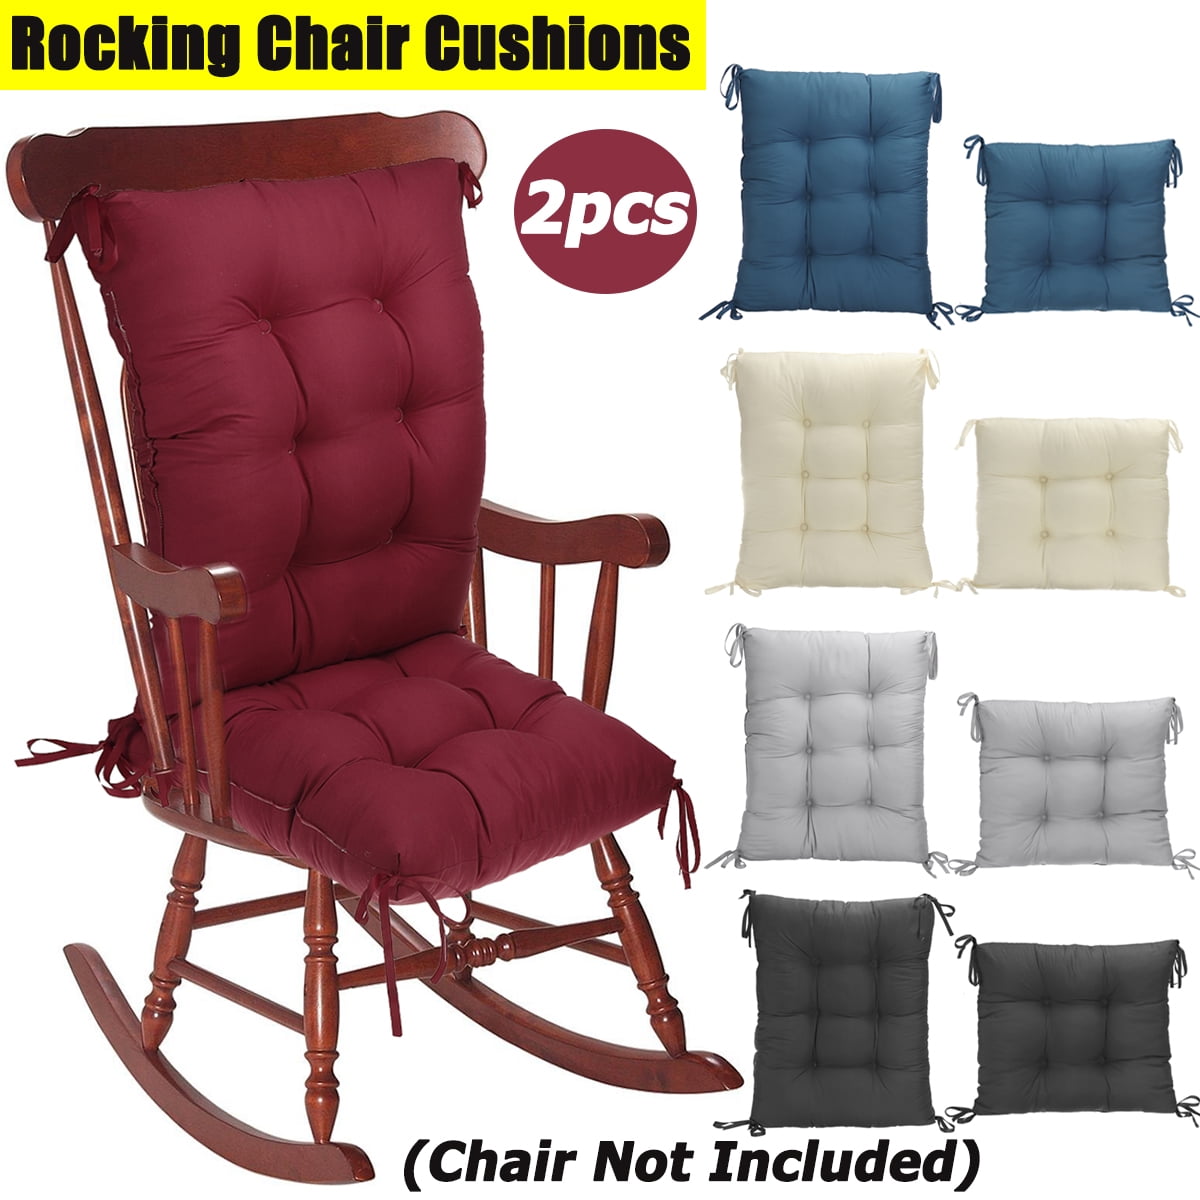 Best Two Piece Rocker Rocking Chair Cushions Seat & Back Pads Set Burgundy Seats 